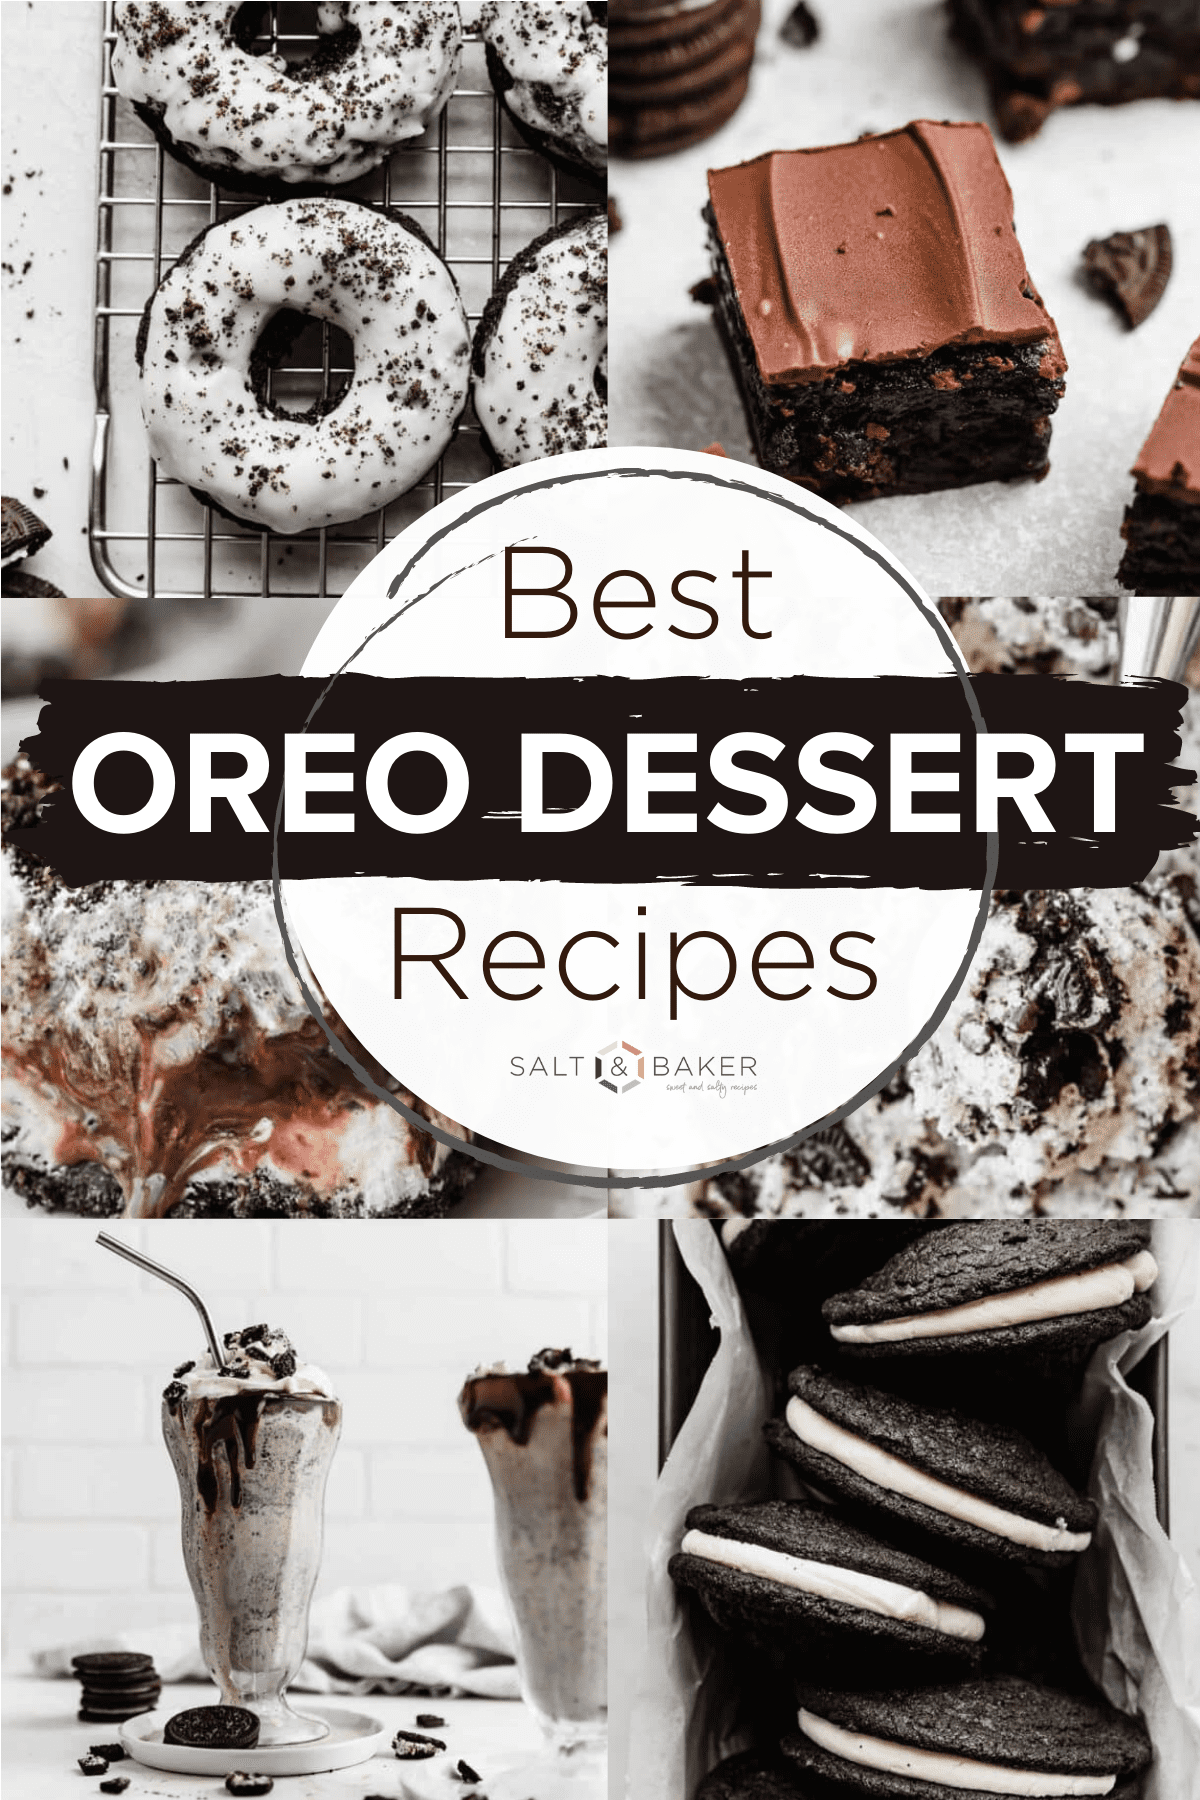 Oreo dessert recipes that will make your mouth water! Oreo milkshake, Oreo brownies, Oreo cookies, Oreo donuts and more!